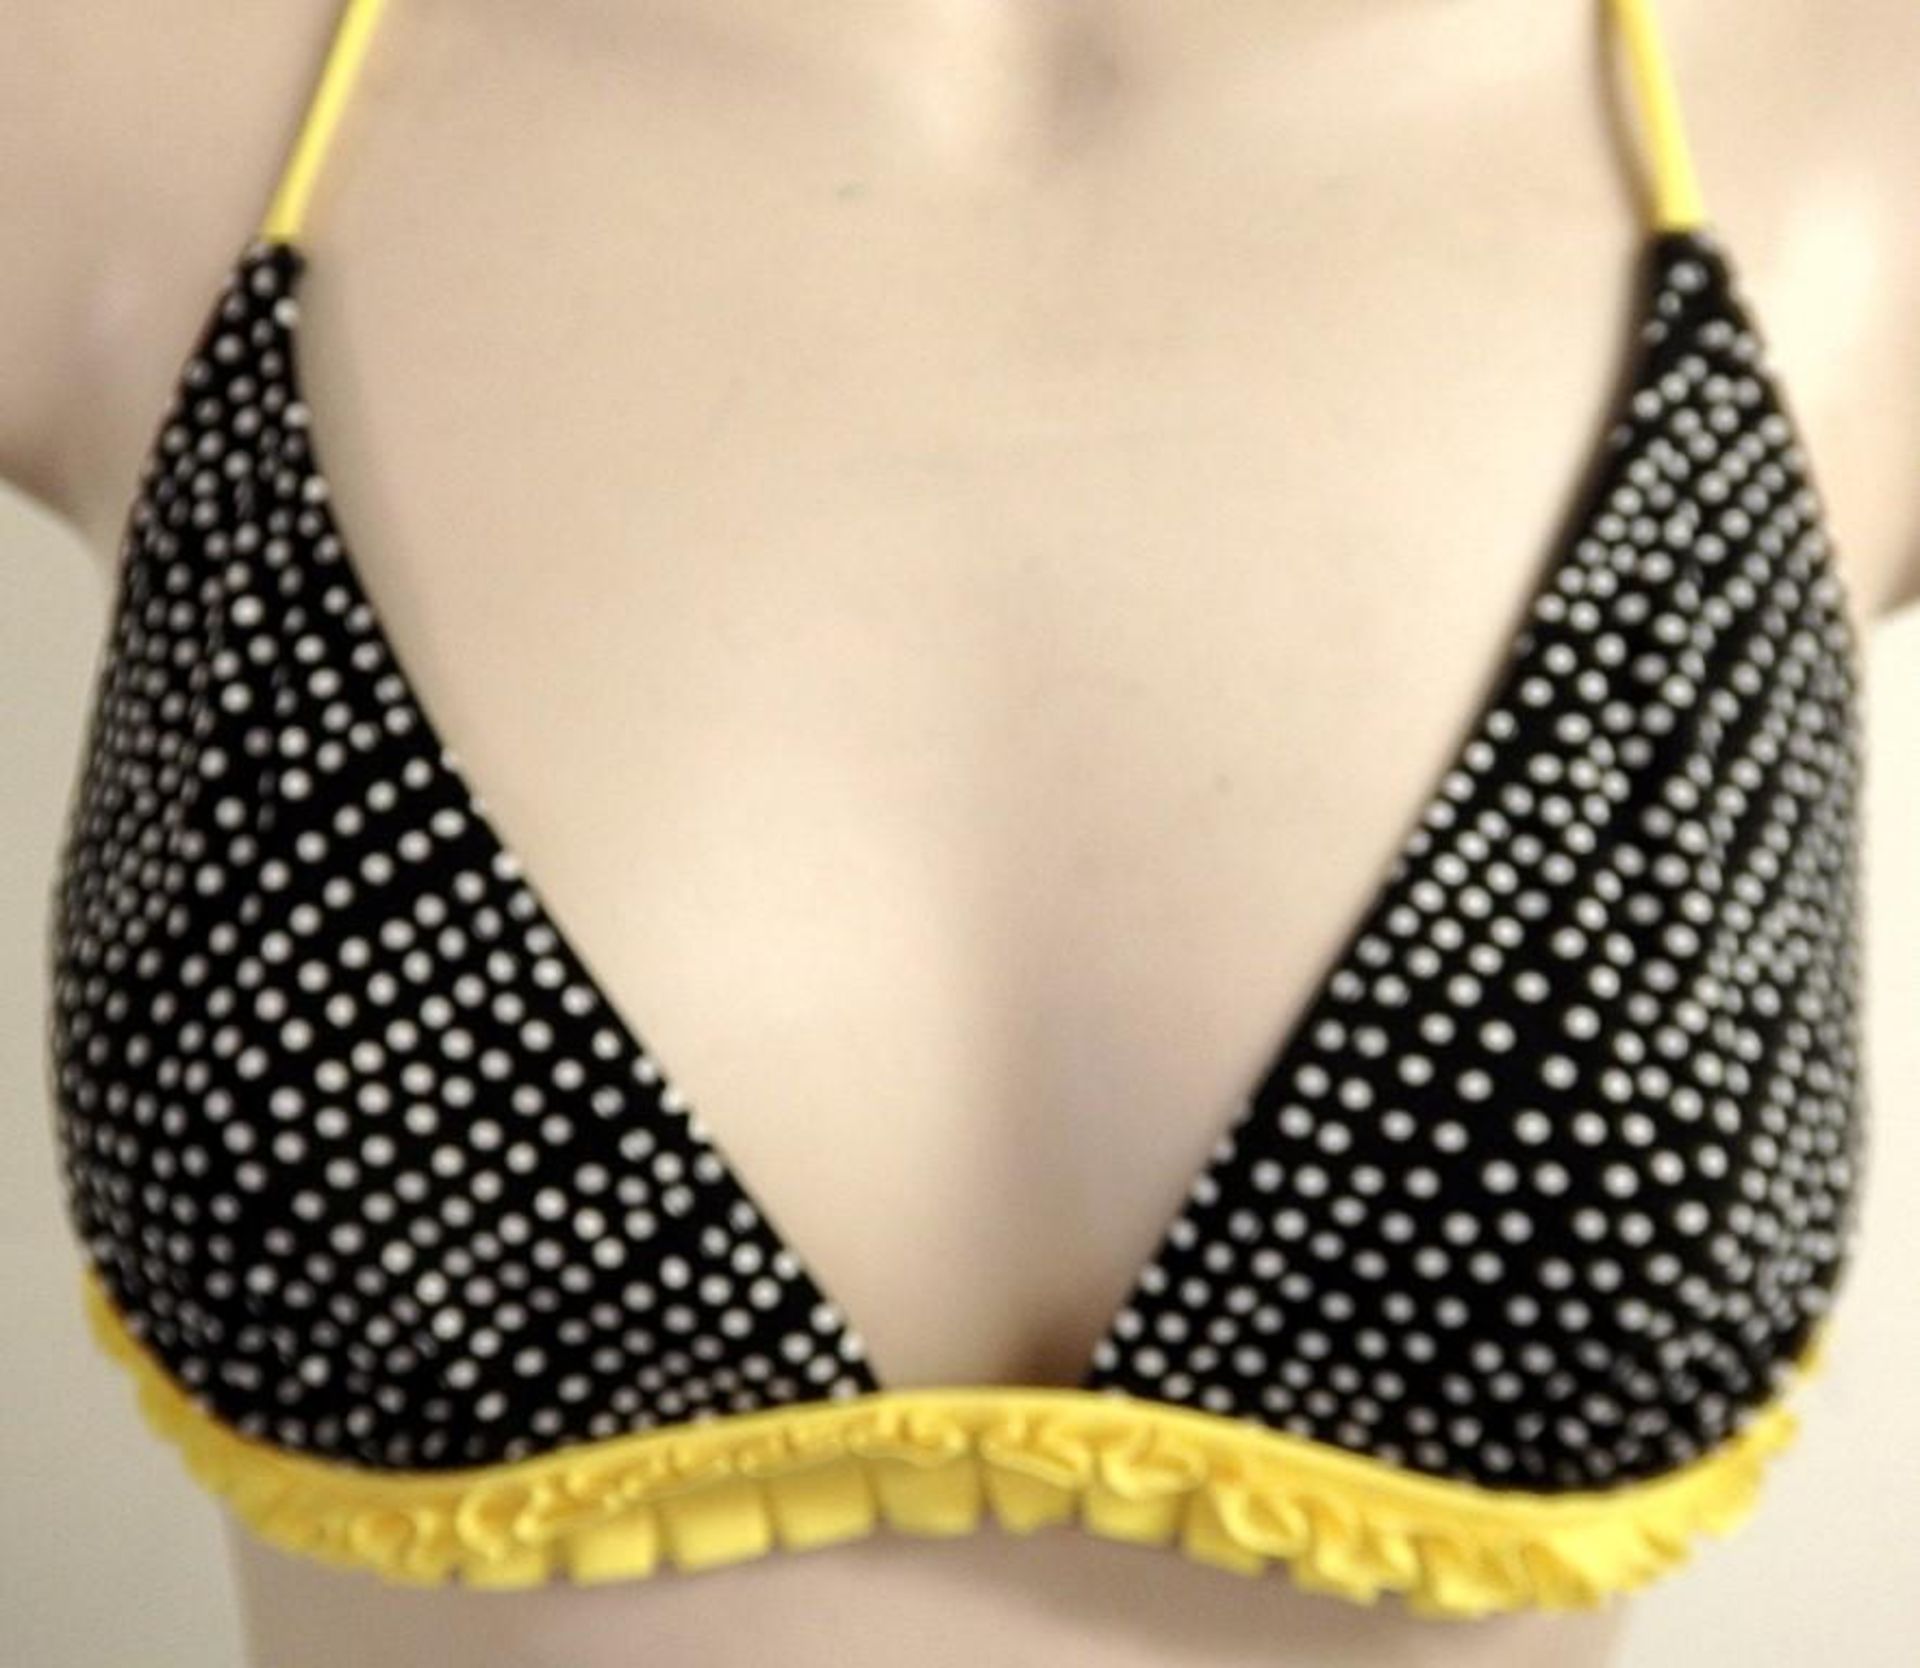 1 x Rasurel - Black Polka dot and Yellow Frill Gold Bikini - R21061 Touquet -Shorty - Size 2 - UK 32 - Image 3 of 9